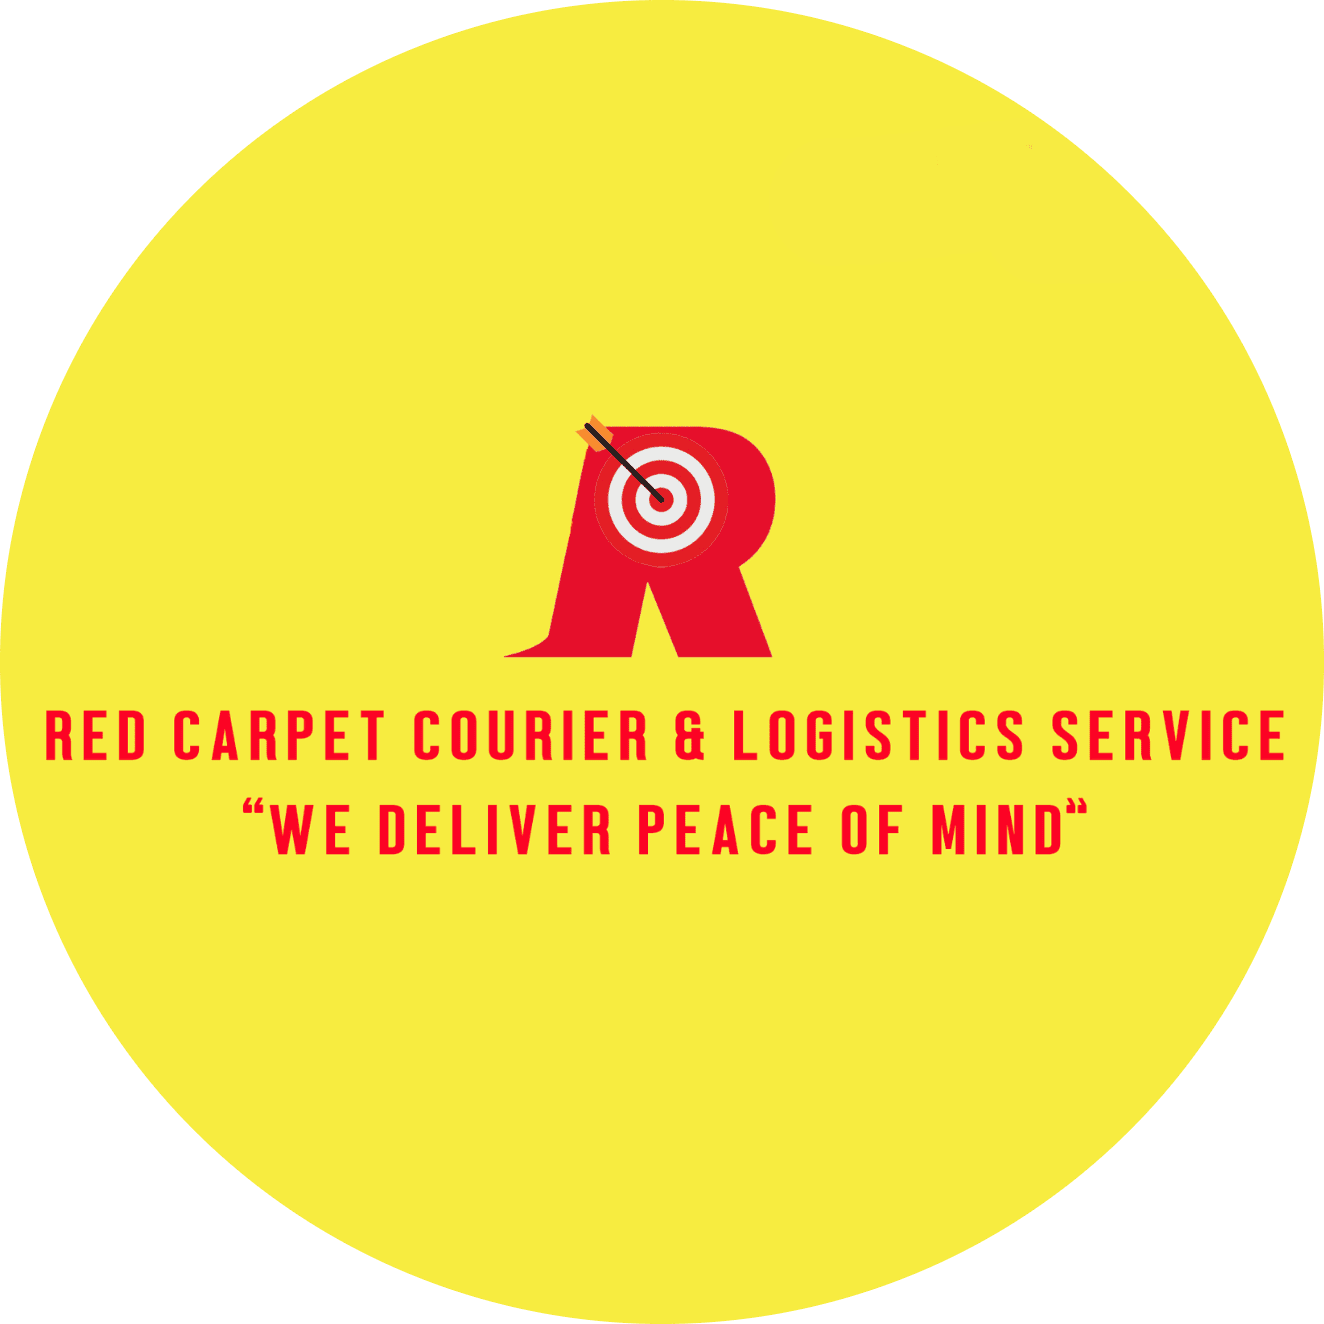 Red Carpet Courier & Logistics Service